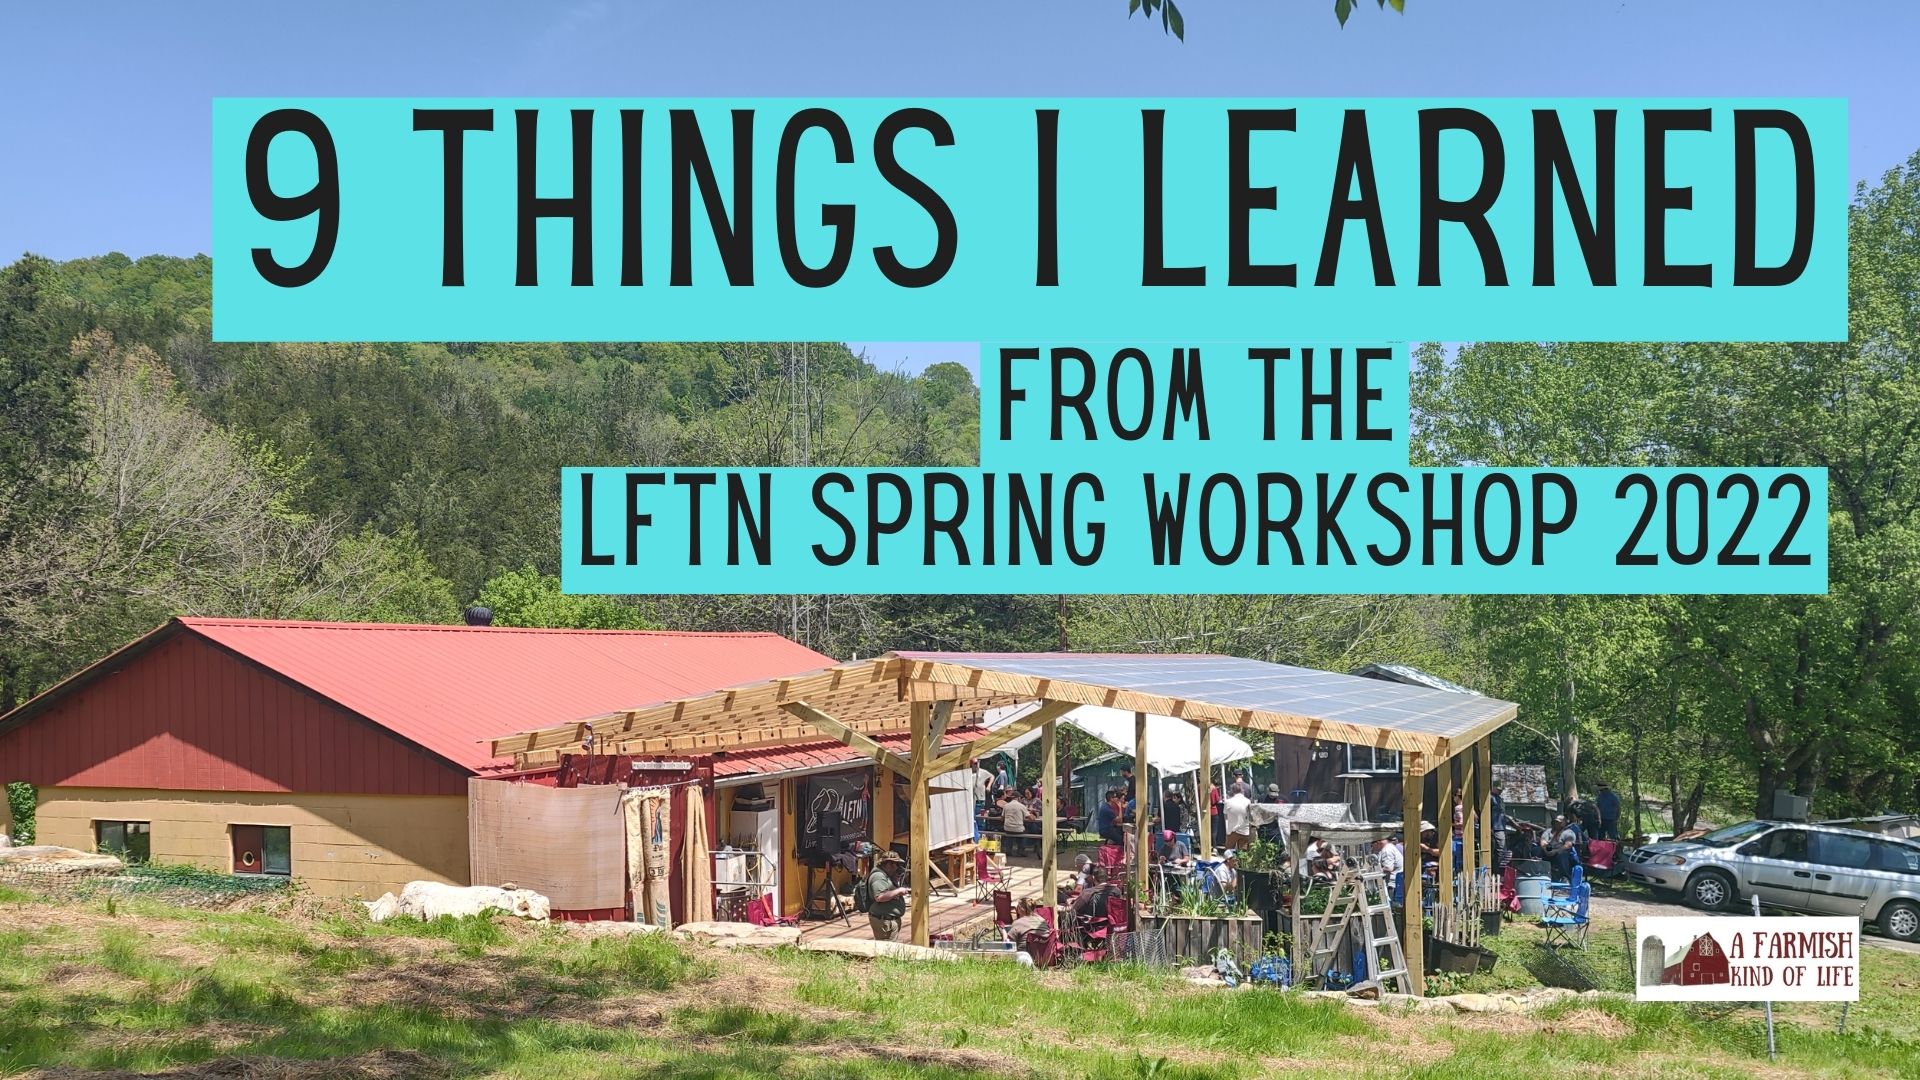 207: 9 Takeaways from LFTN Spring Workshop 2022